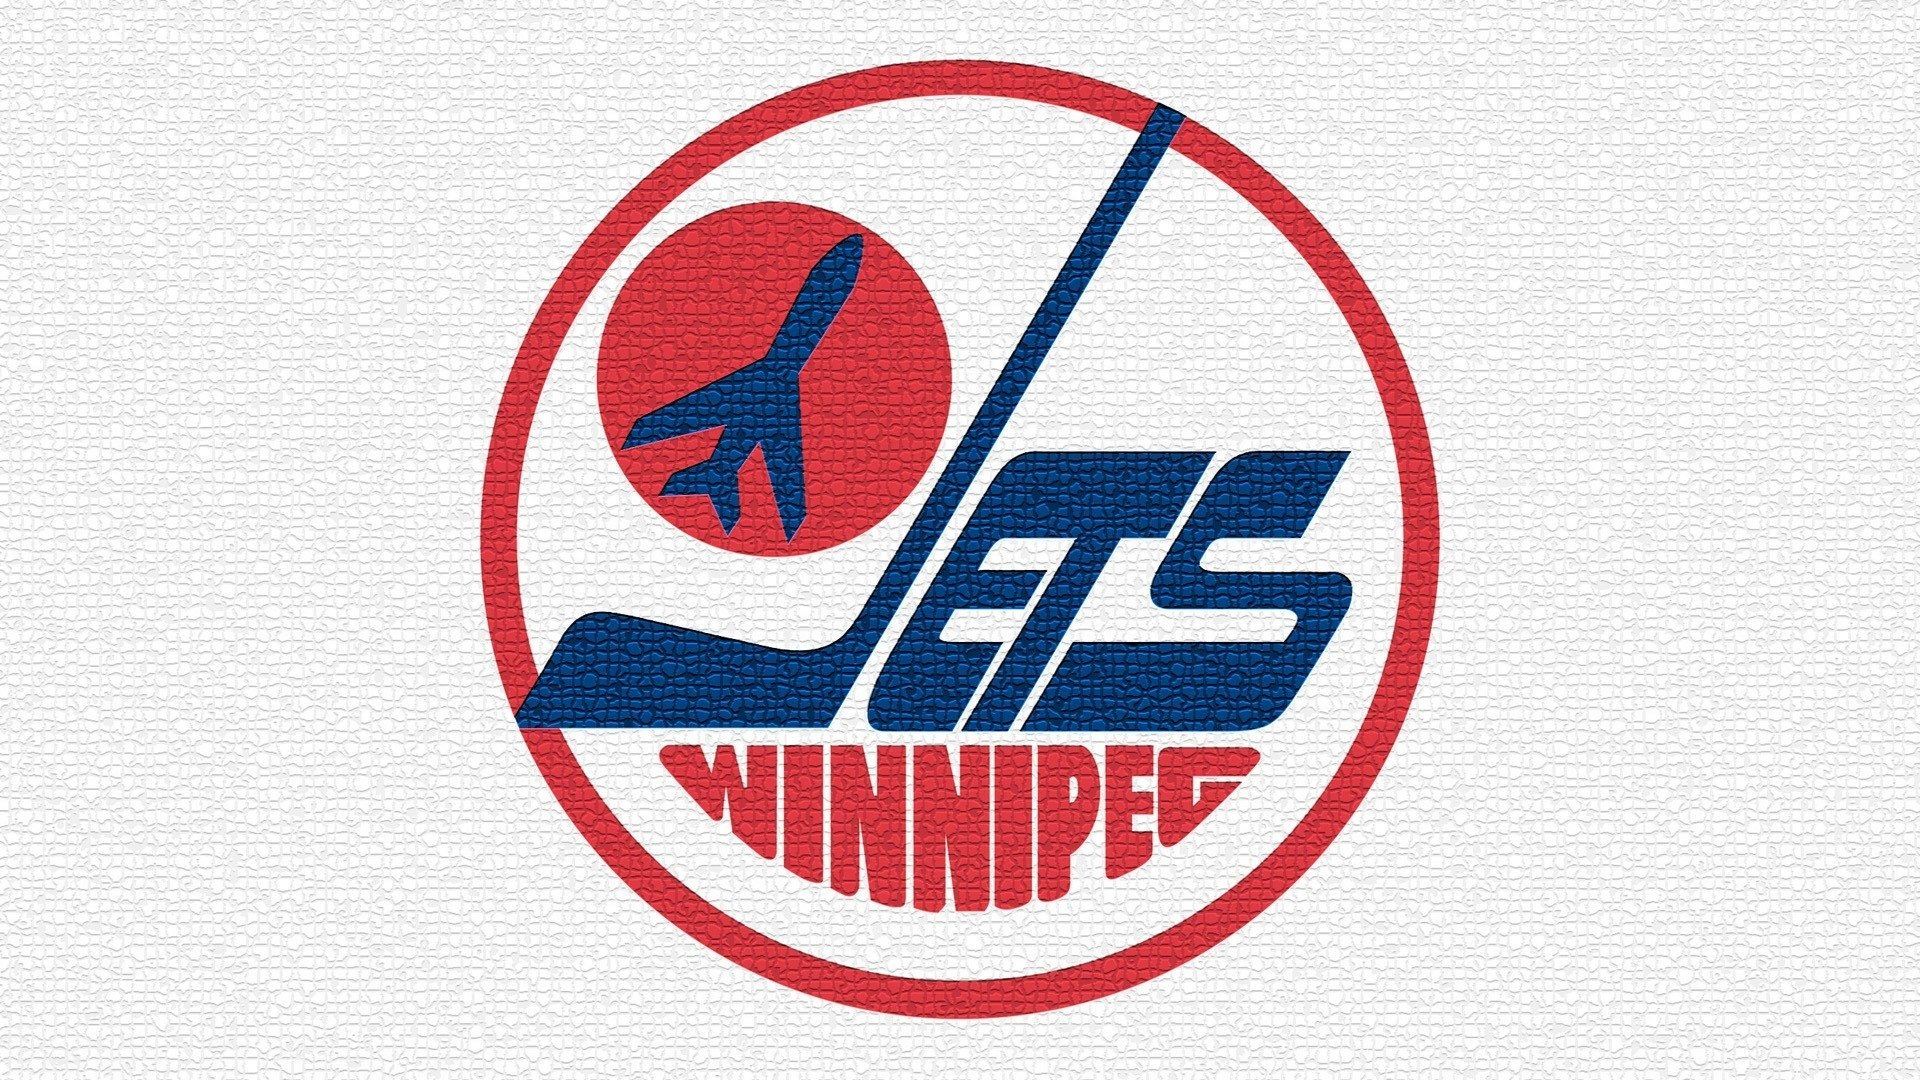 Winnipeg Jets wallpaper - Sport wallpapers - #19508